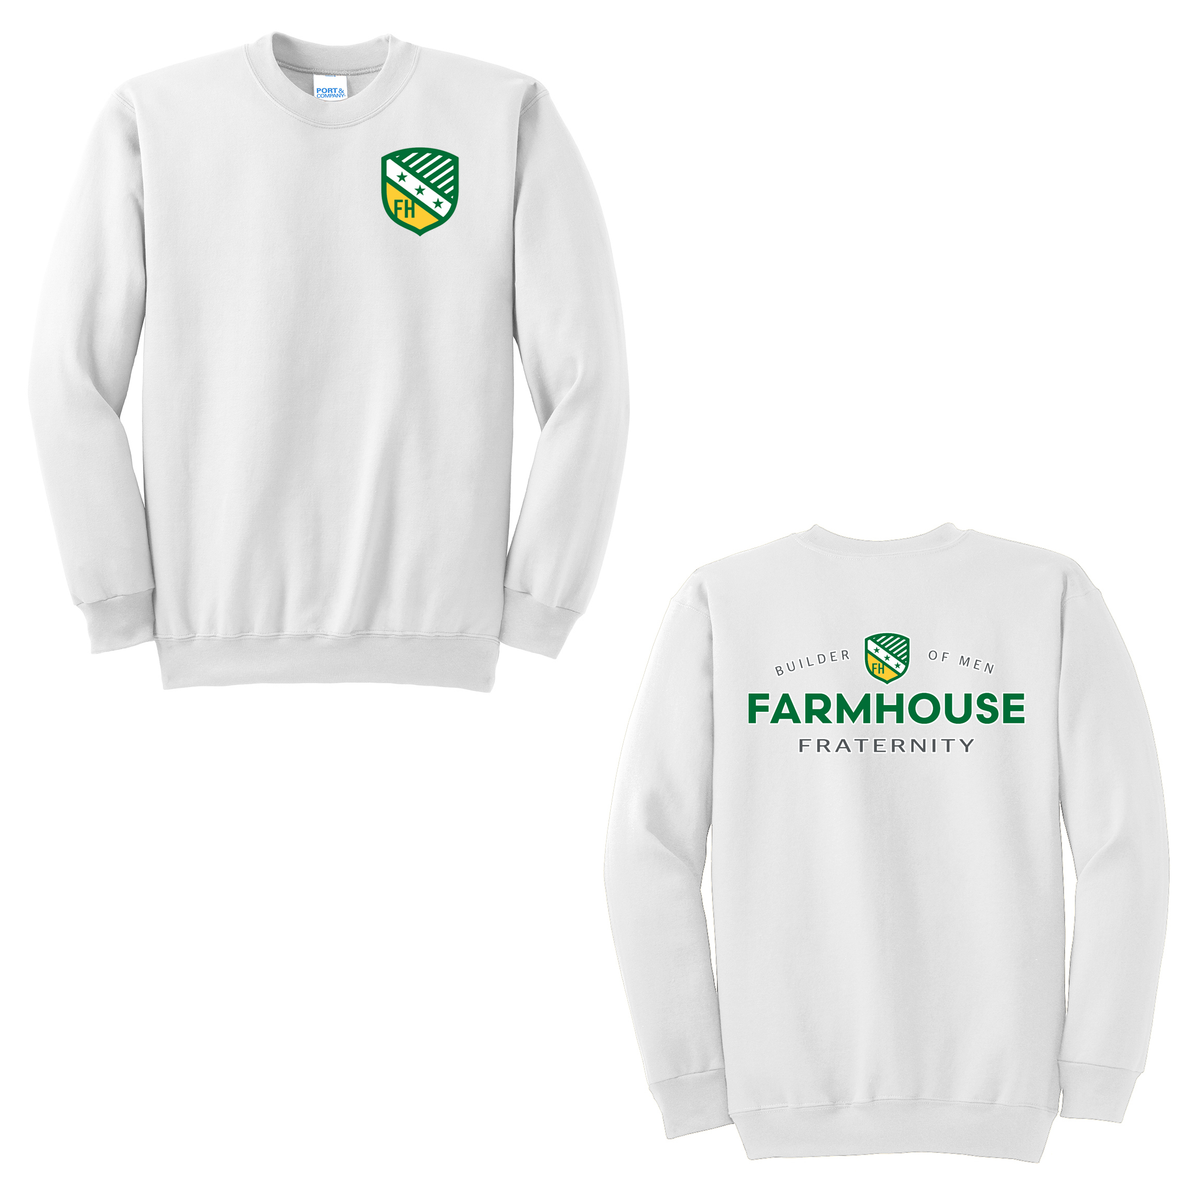 FarmHouse Fraternity Crew Neck Sweater